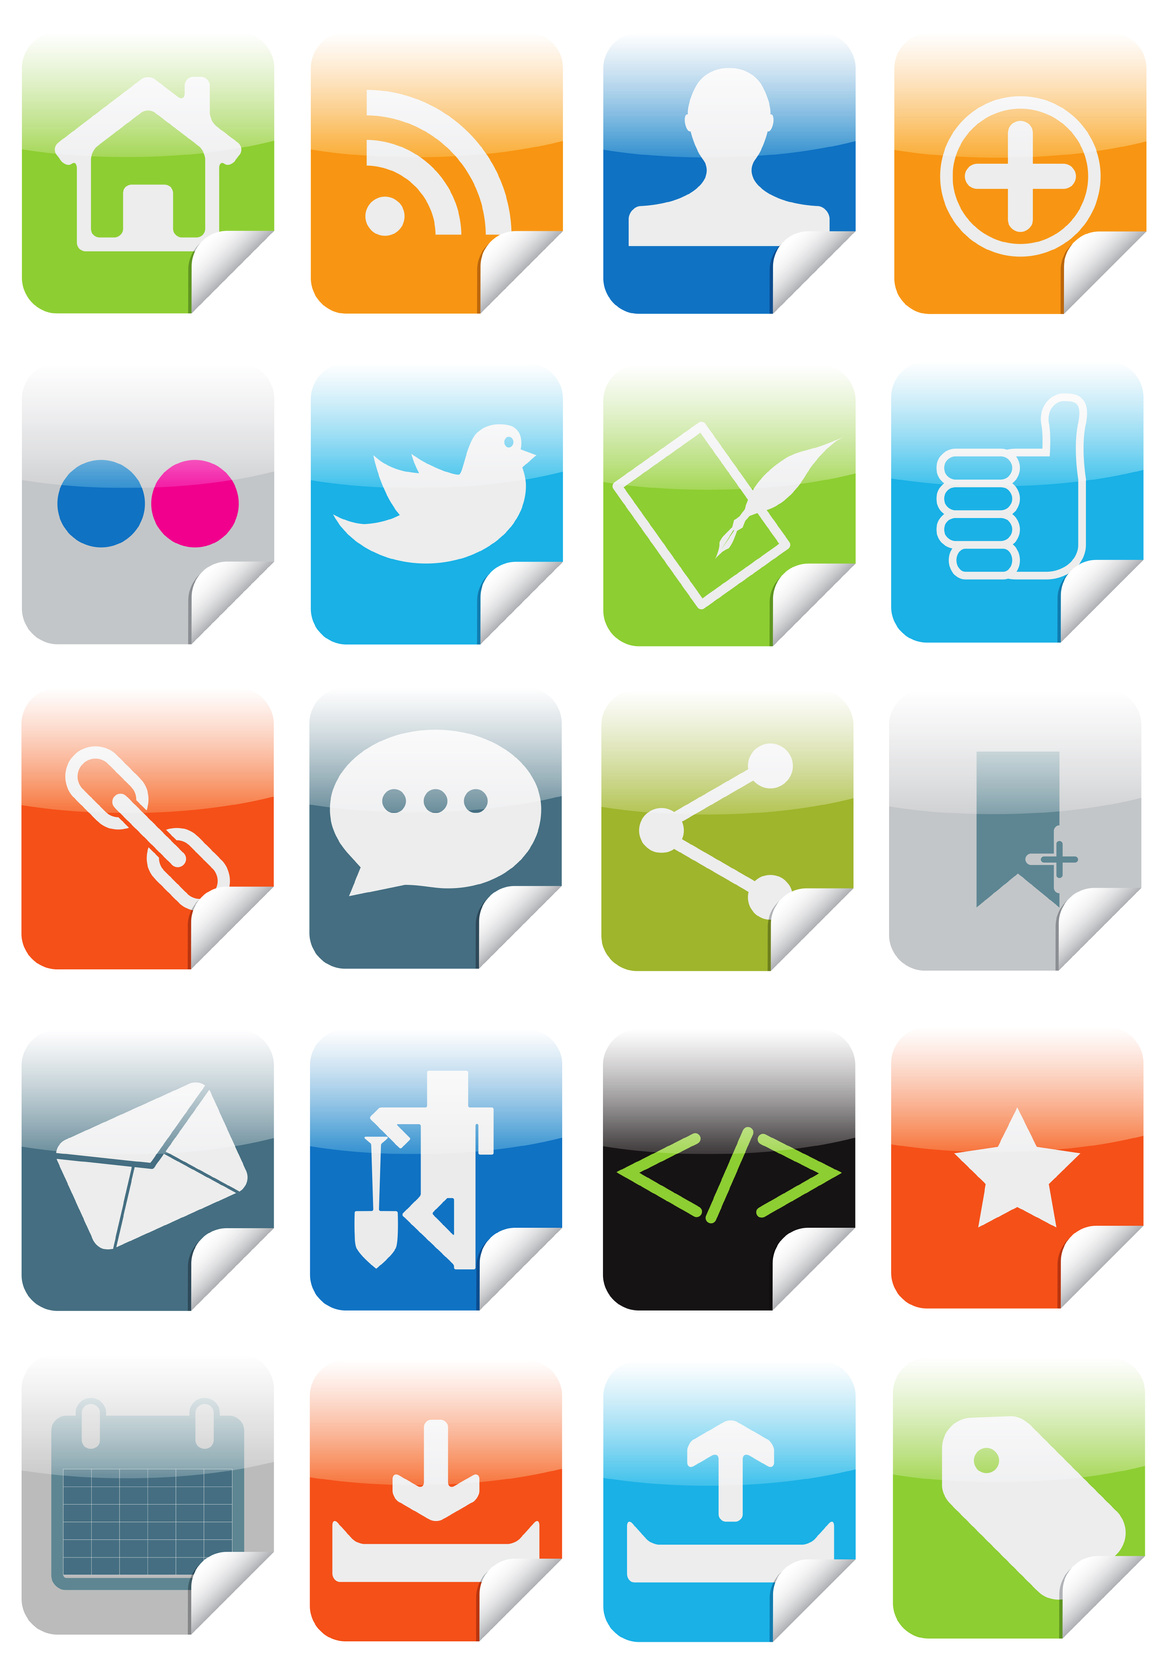 Sticker shaped social media icons